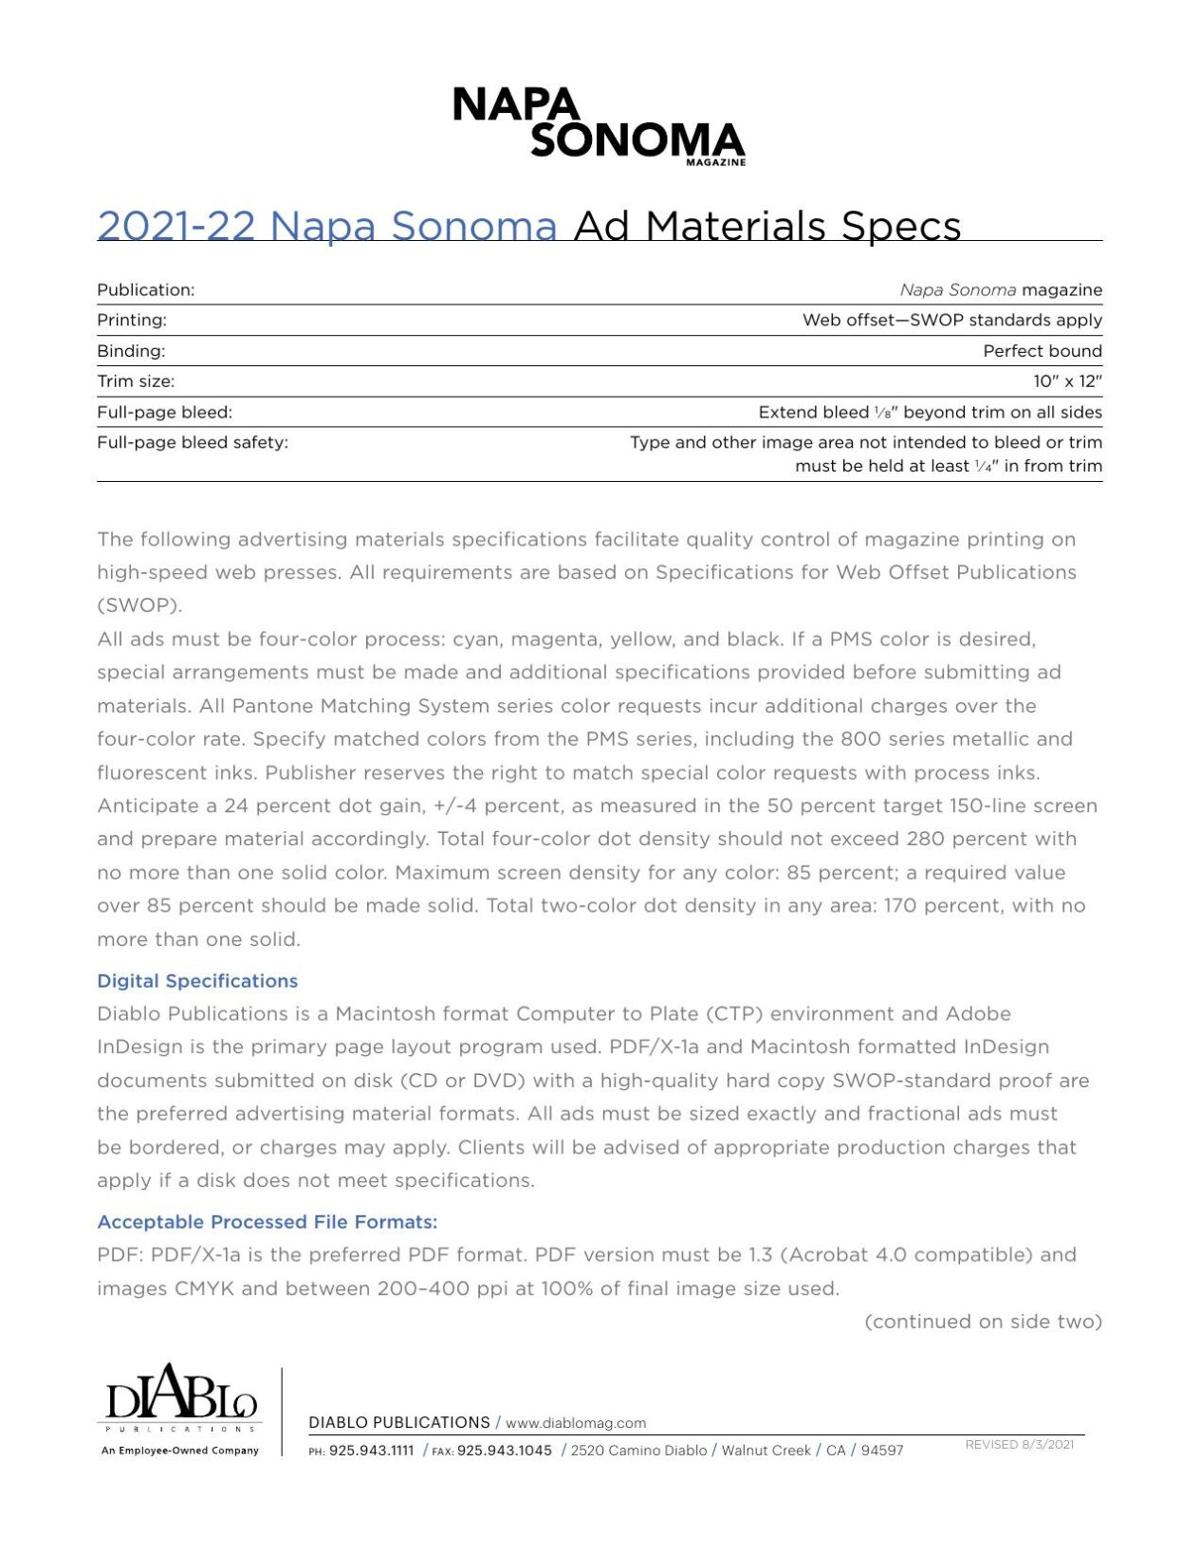 NS21-22_SPECS.pdf